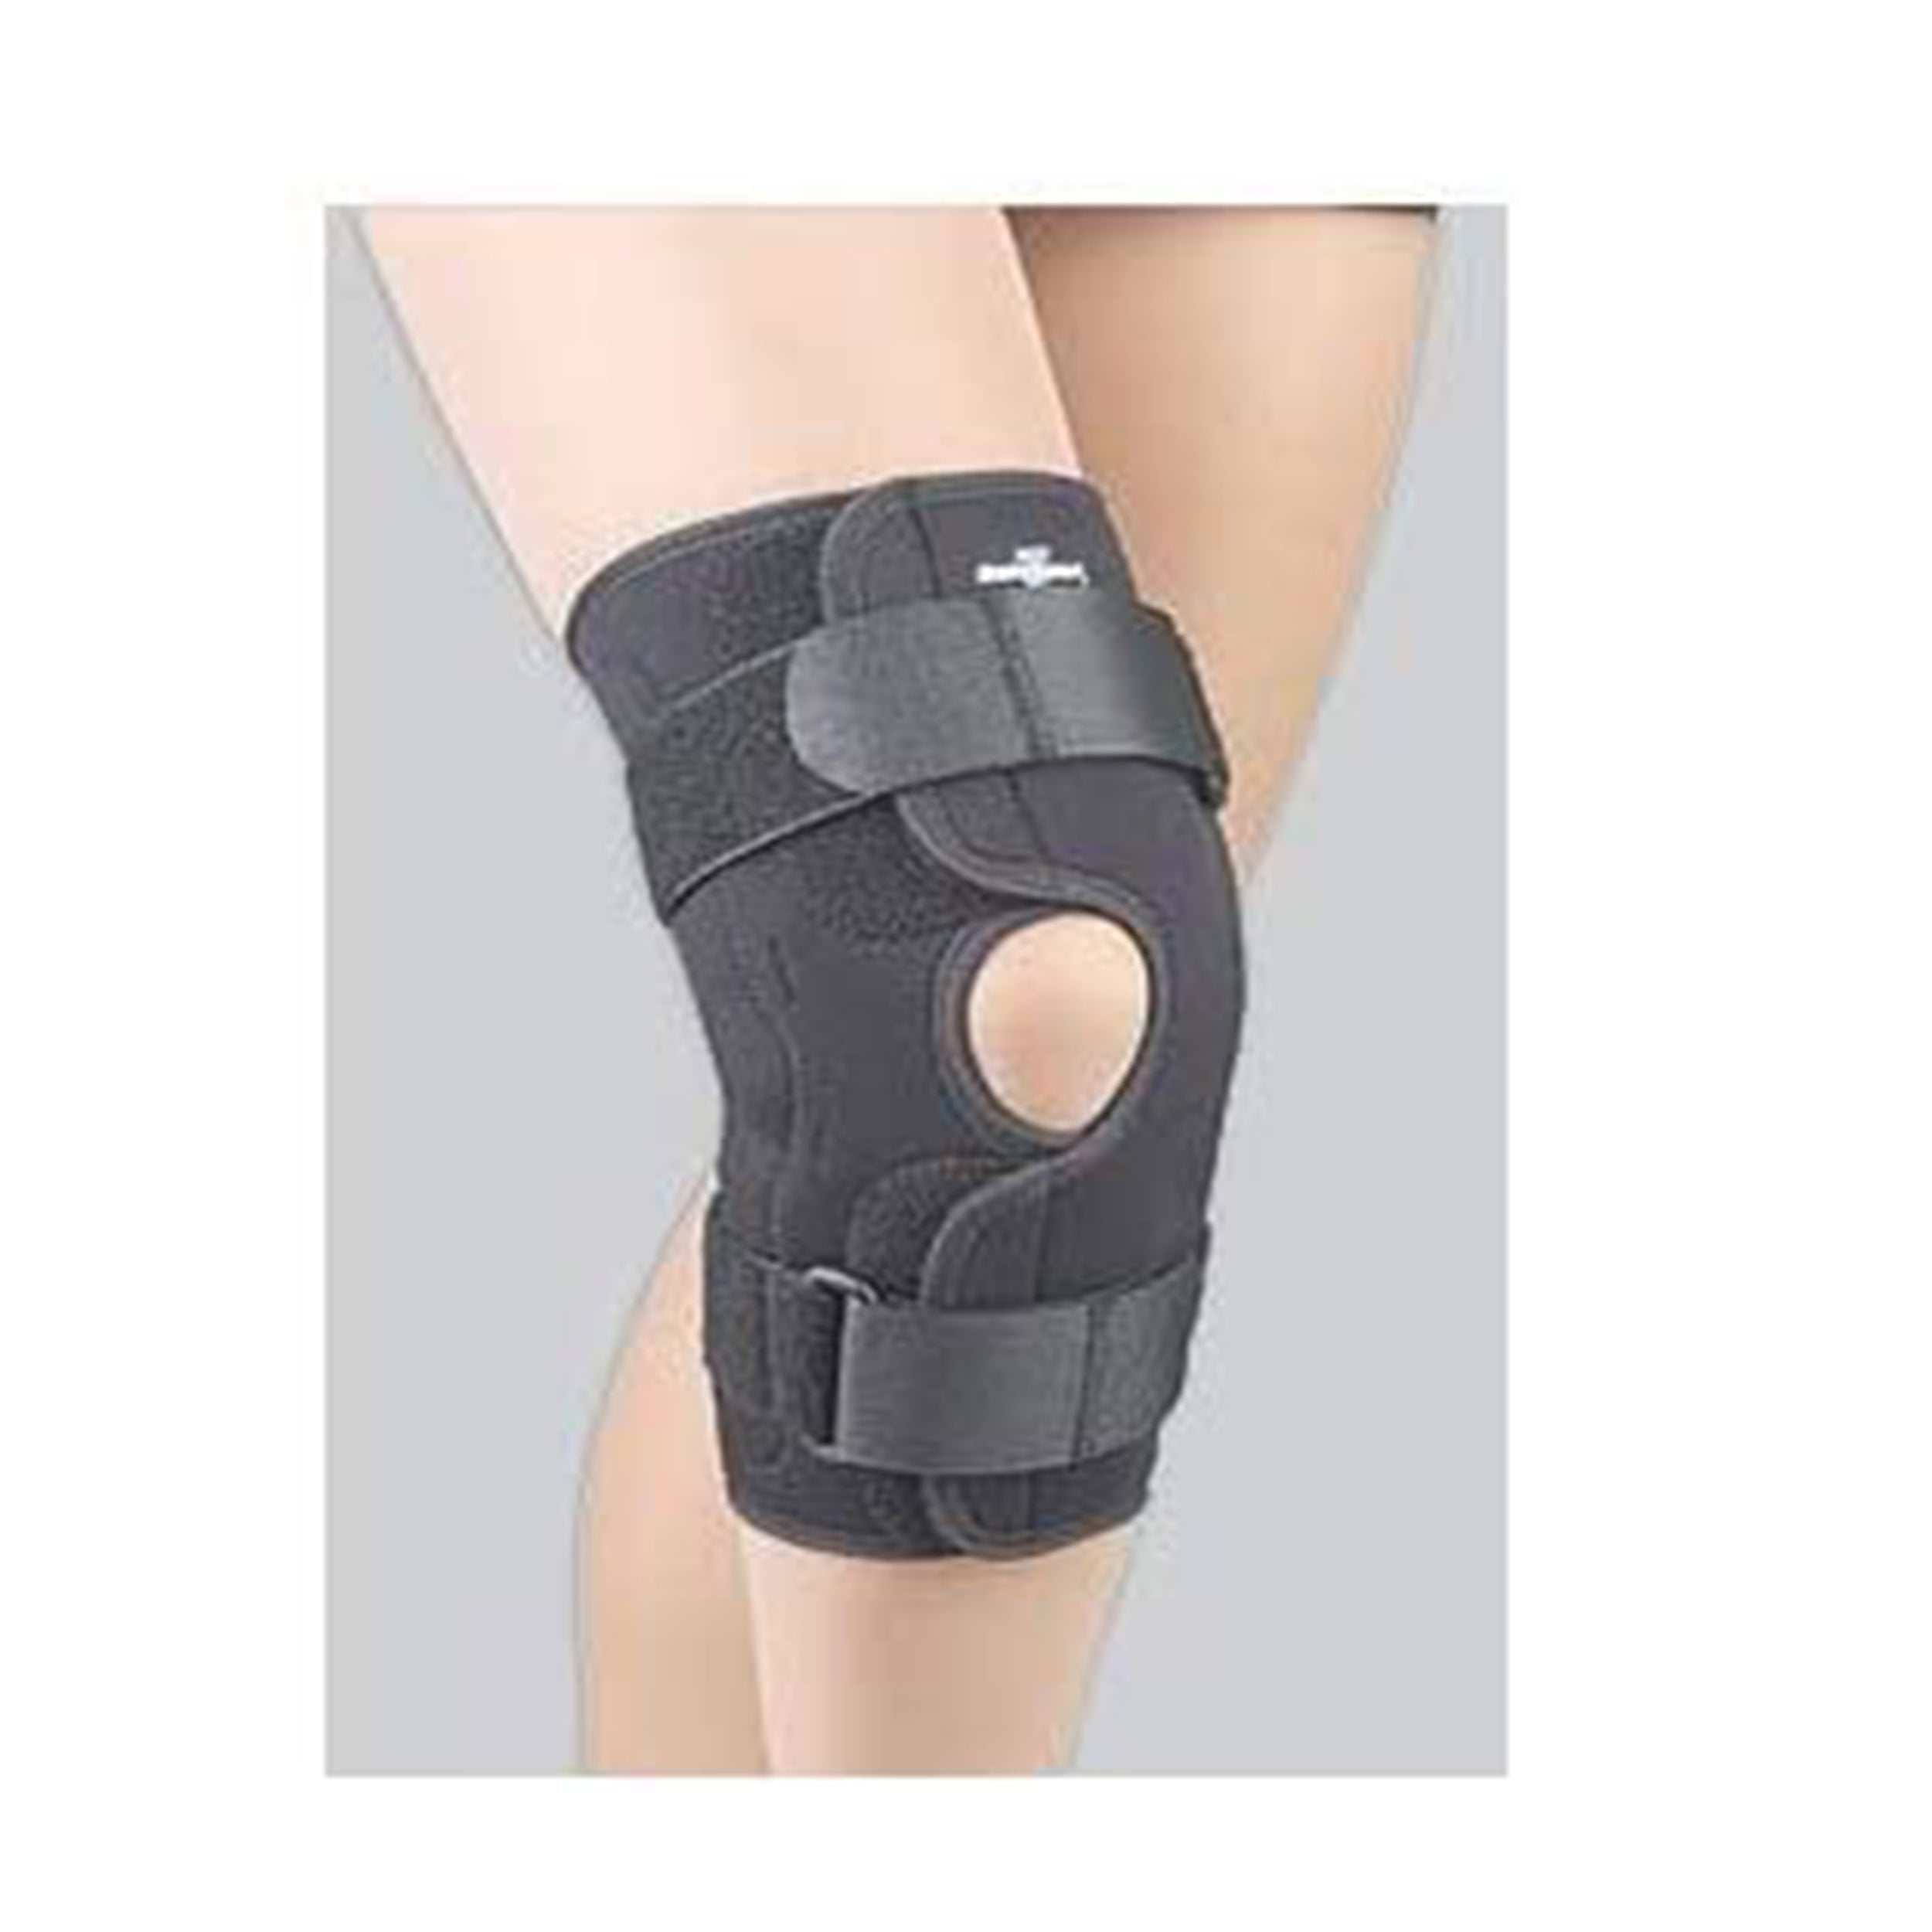 FLA Safe-T-Sport® Neoprene Wrap-Around Hinged Knee Brace